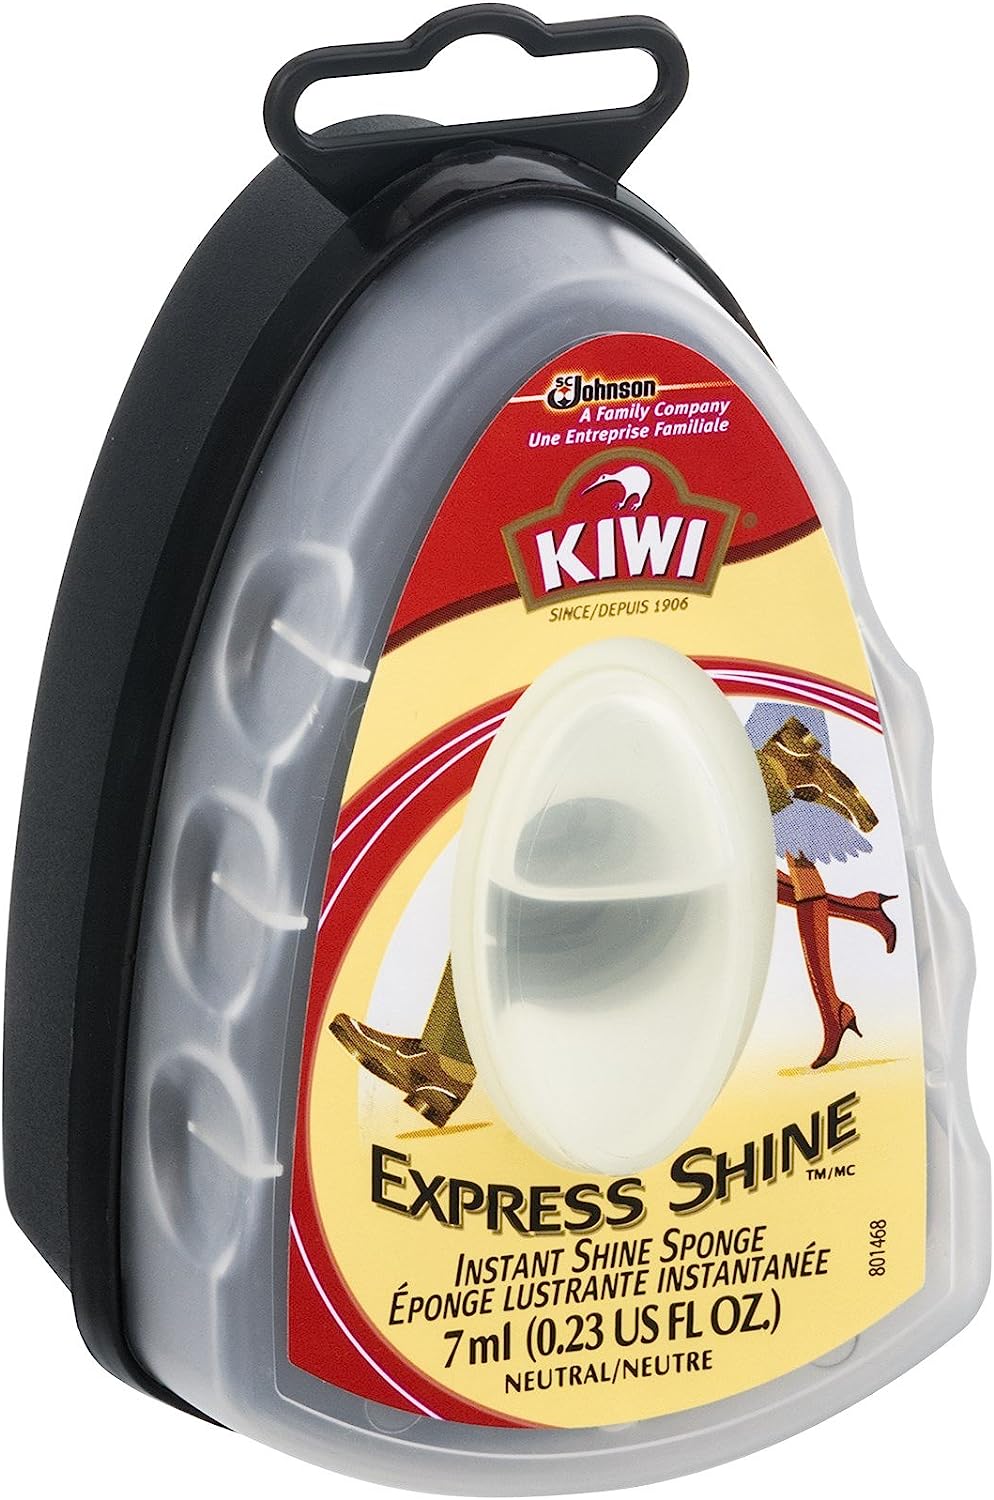 KIWI Express Shoe Shine Sponge | Leather Care for [...]